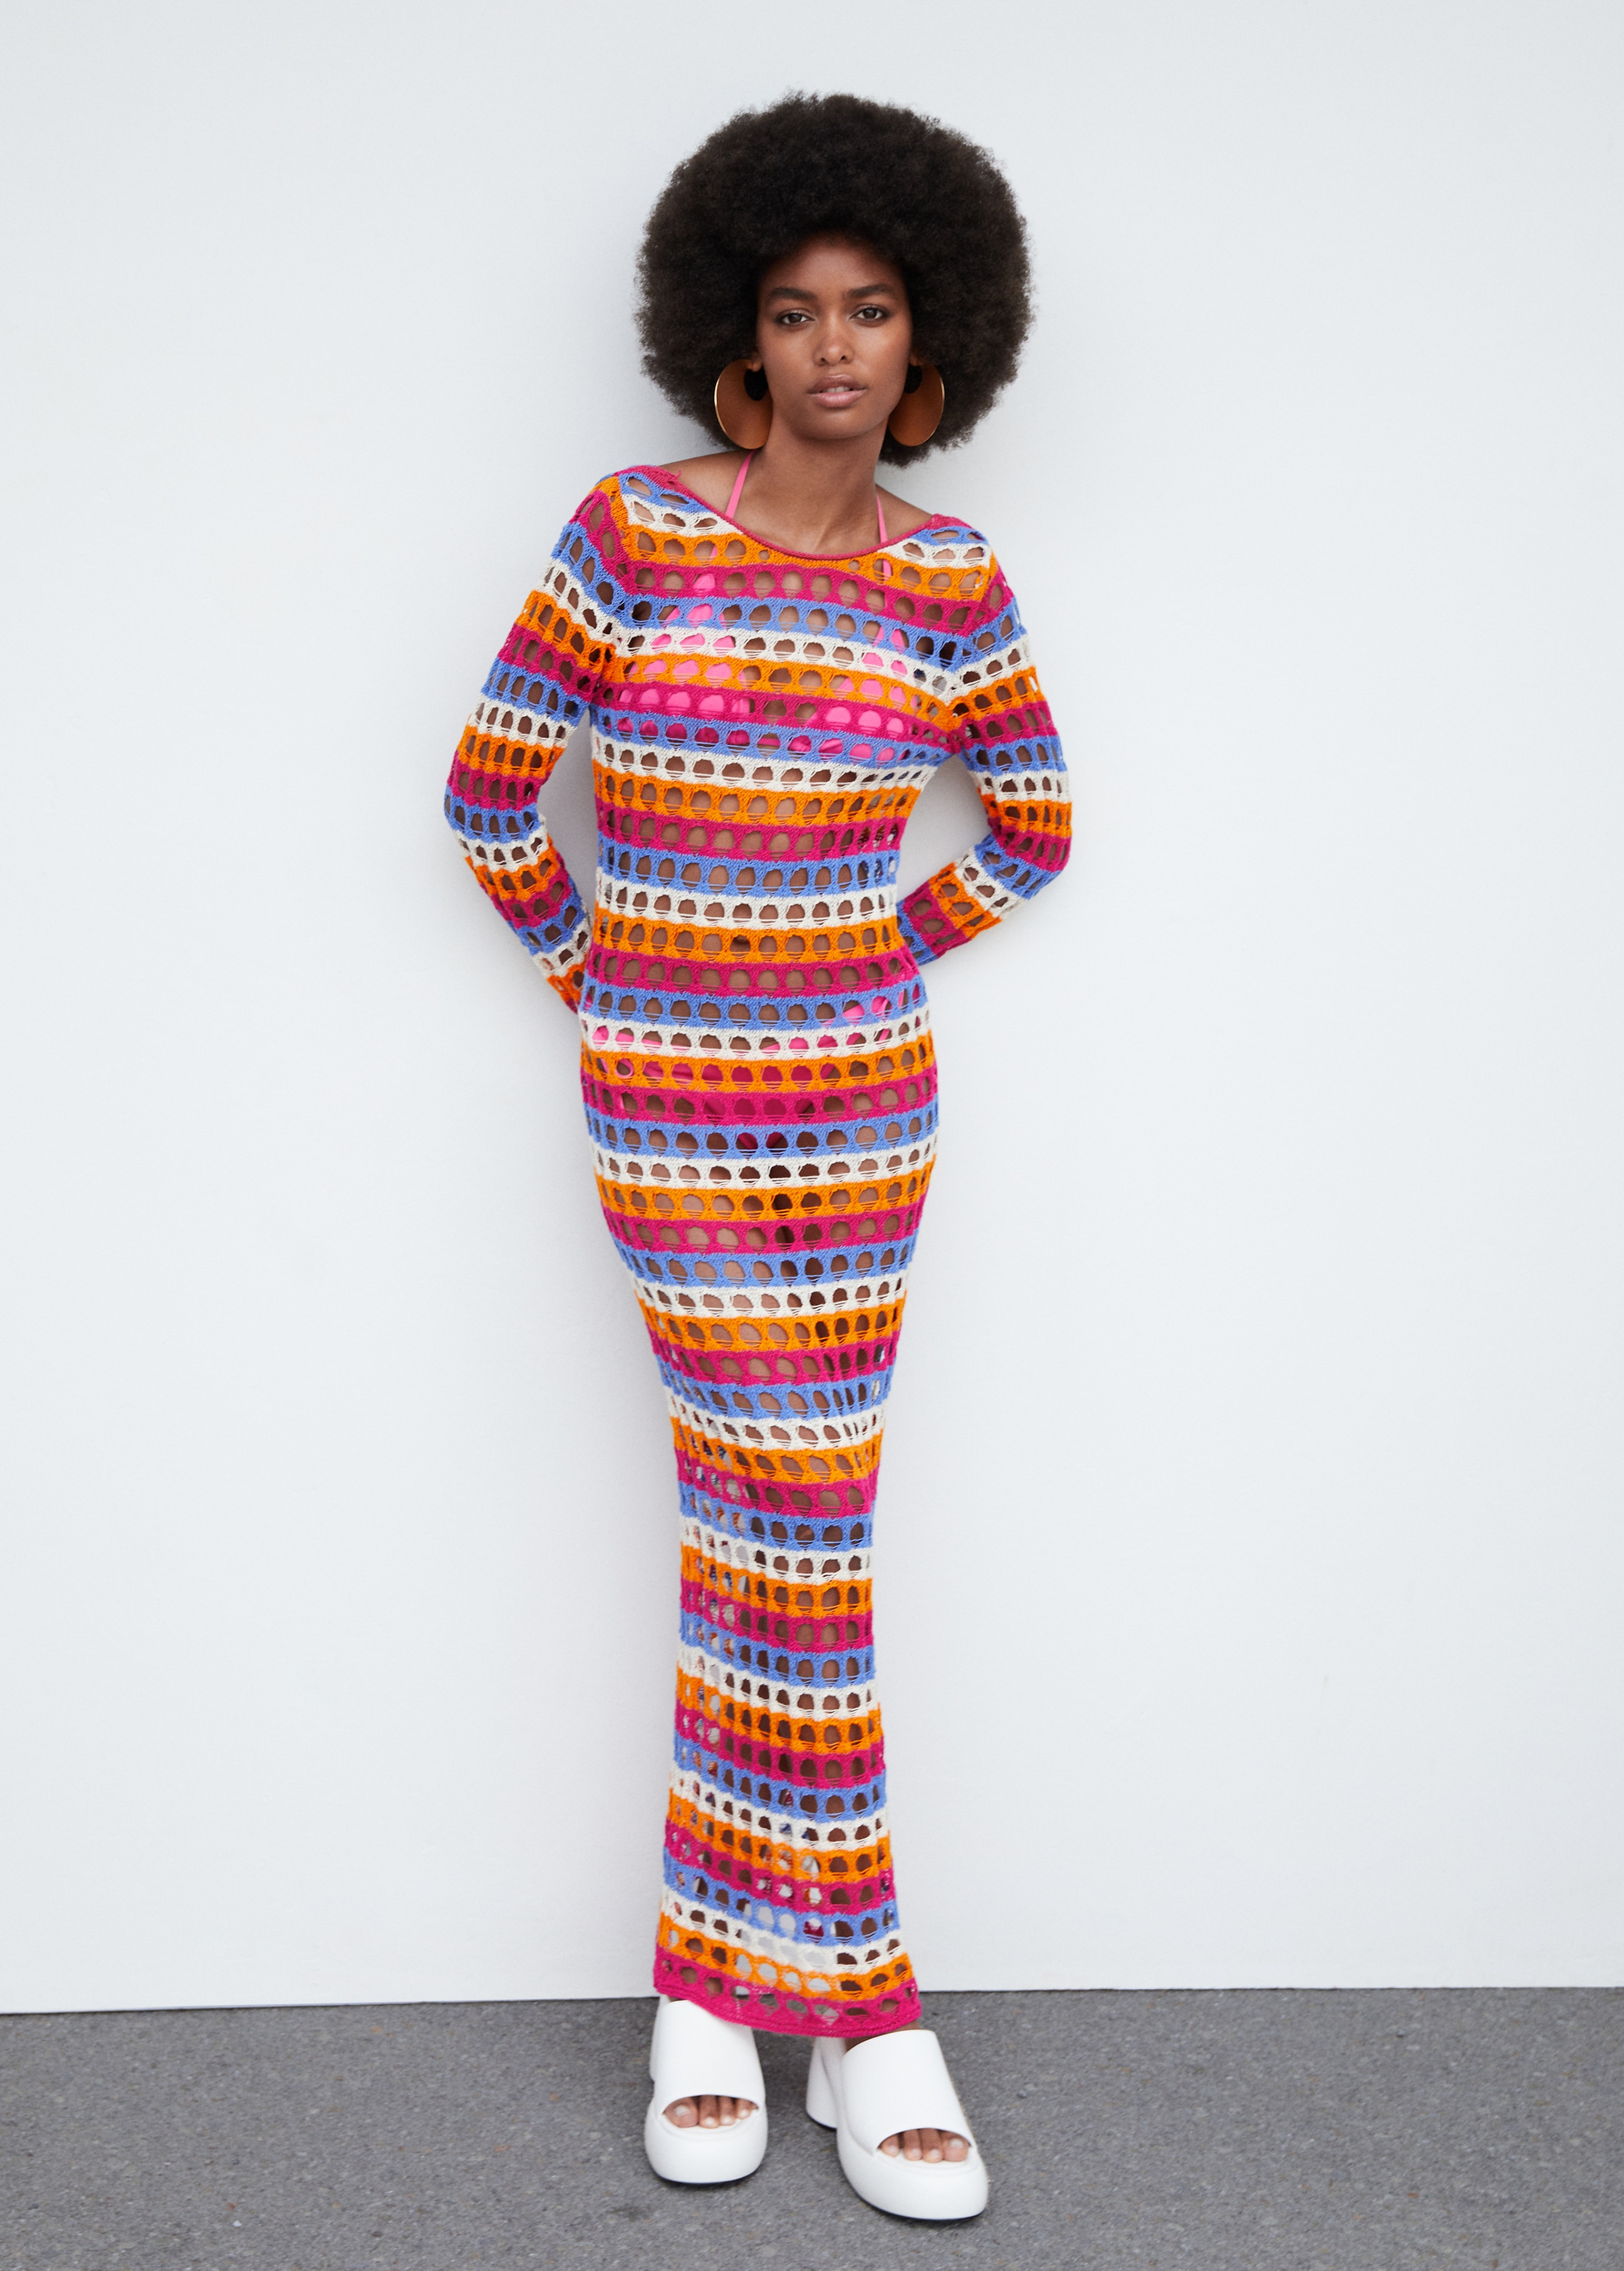 Multi-coloured crochet dress - General plane